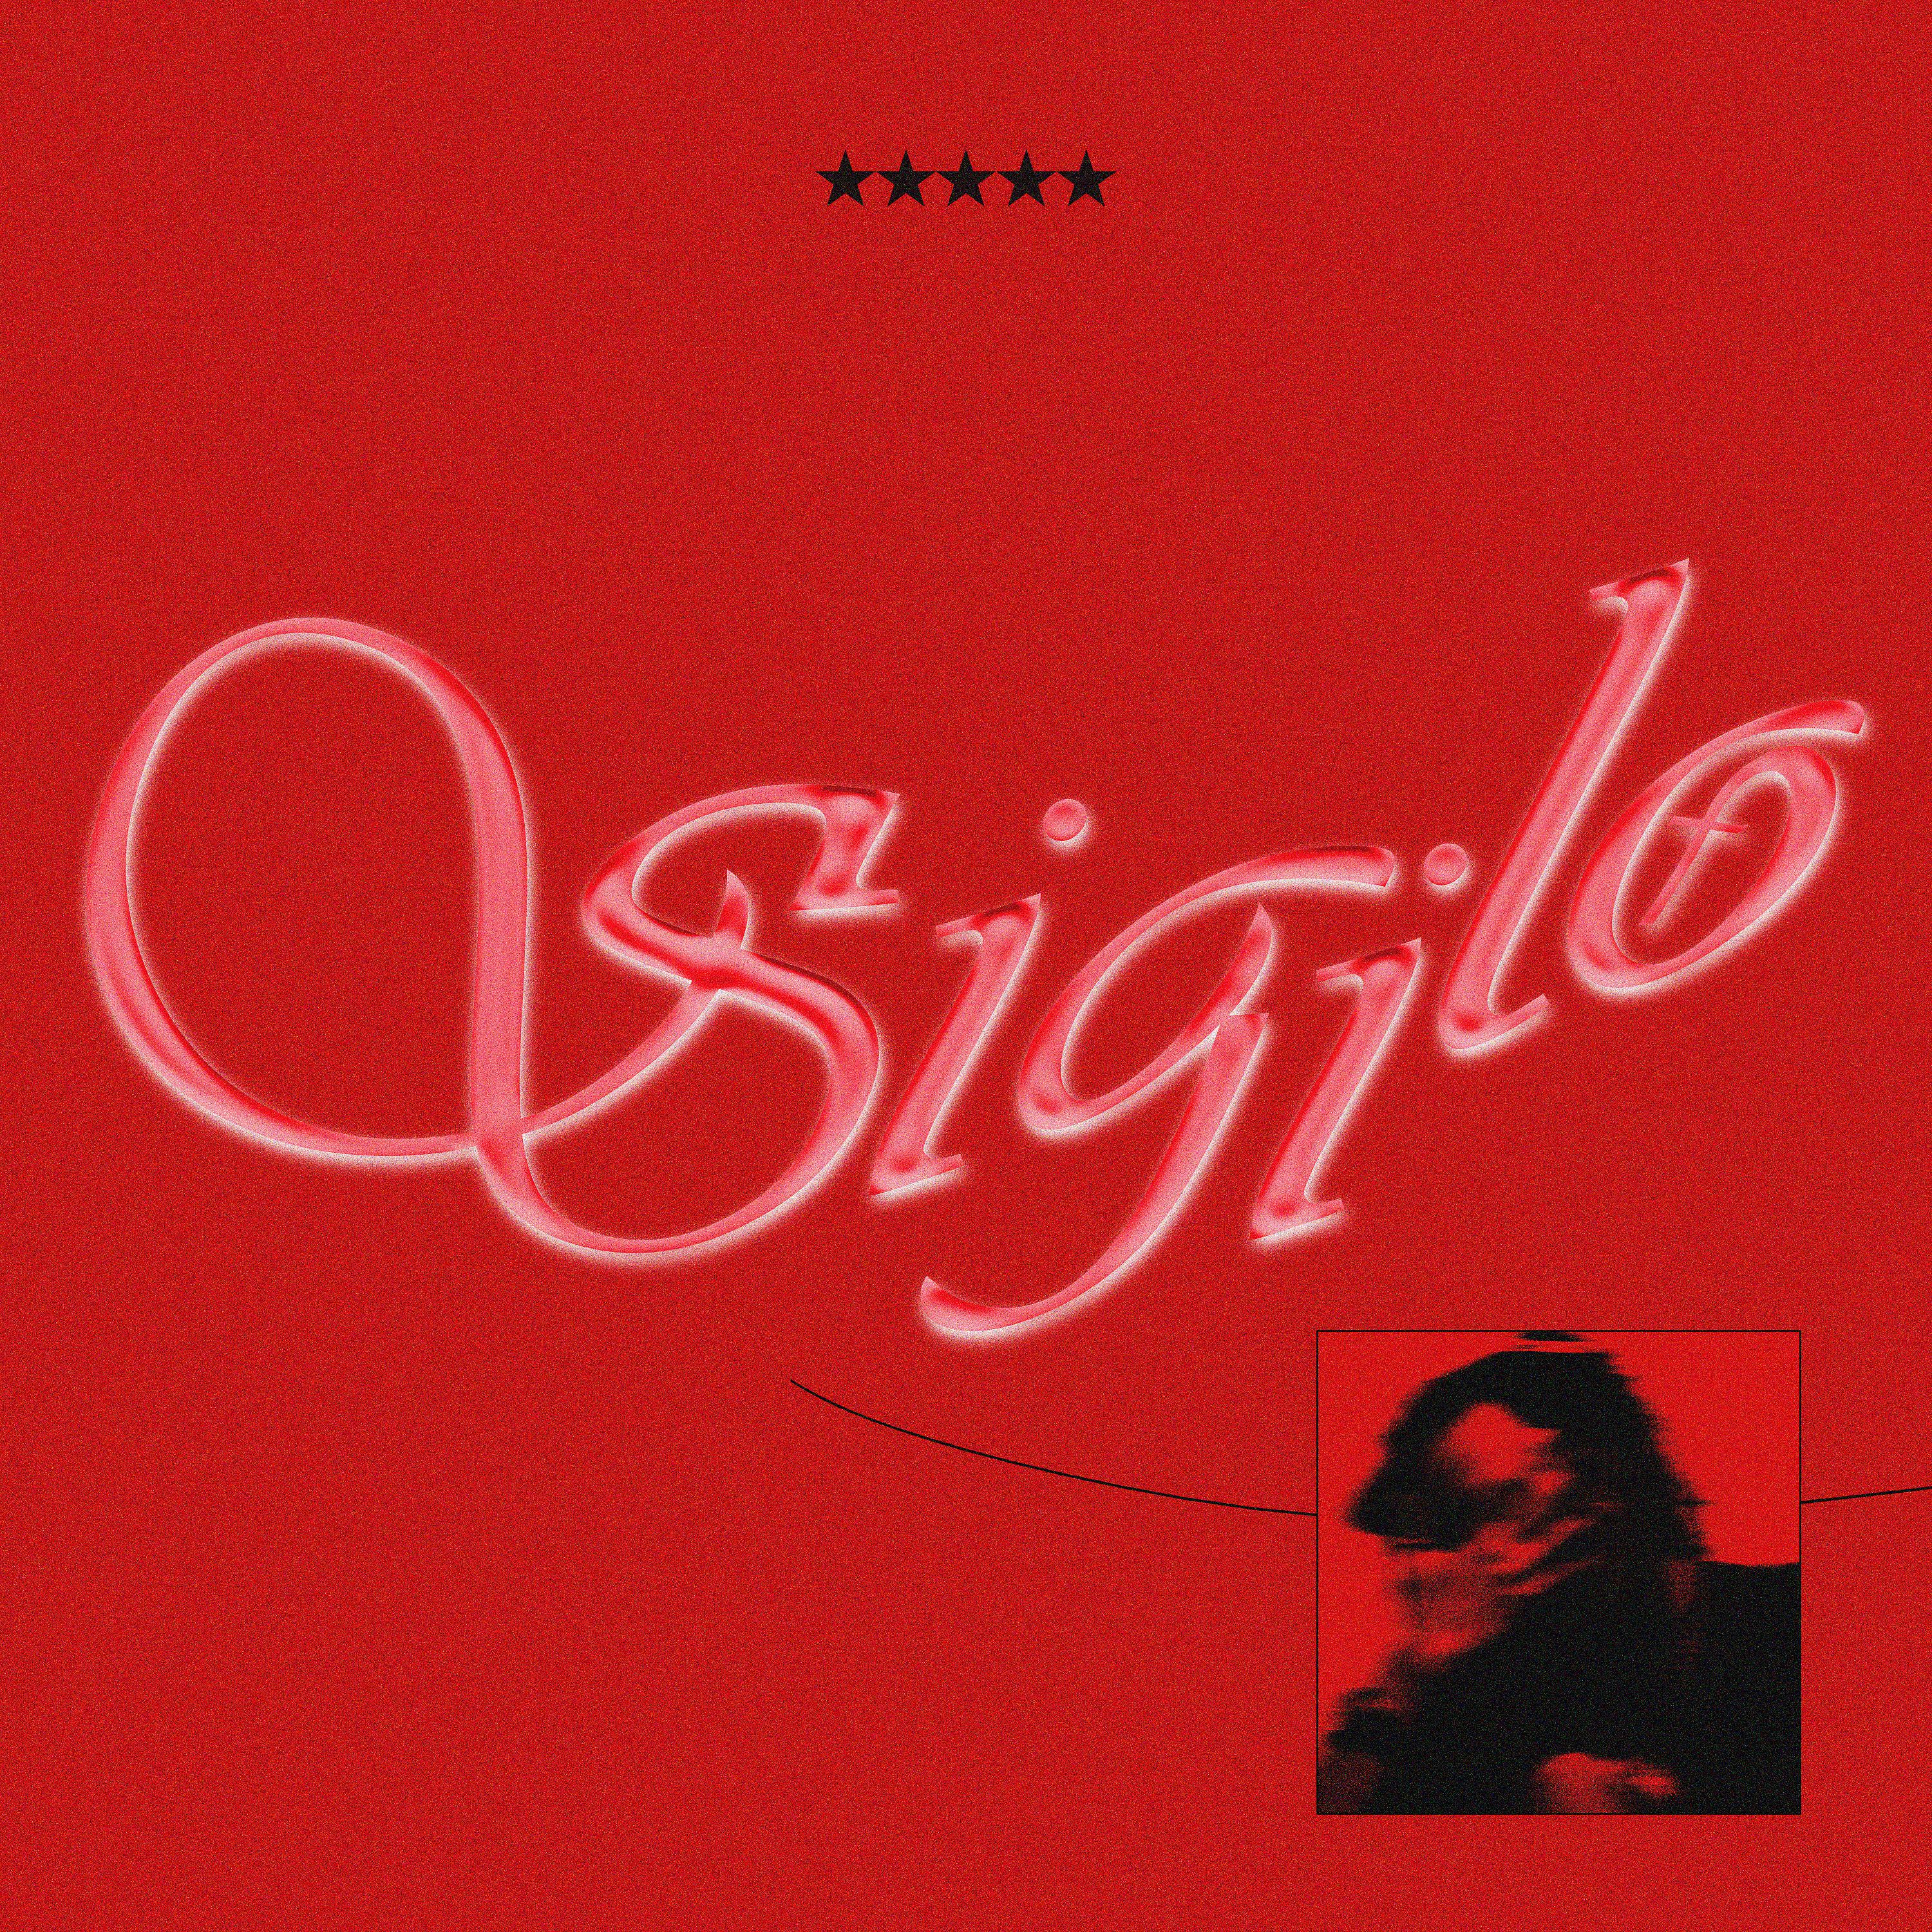 Постер альбома Sigilo